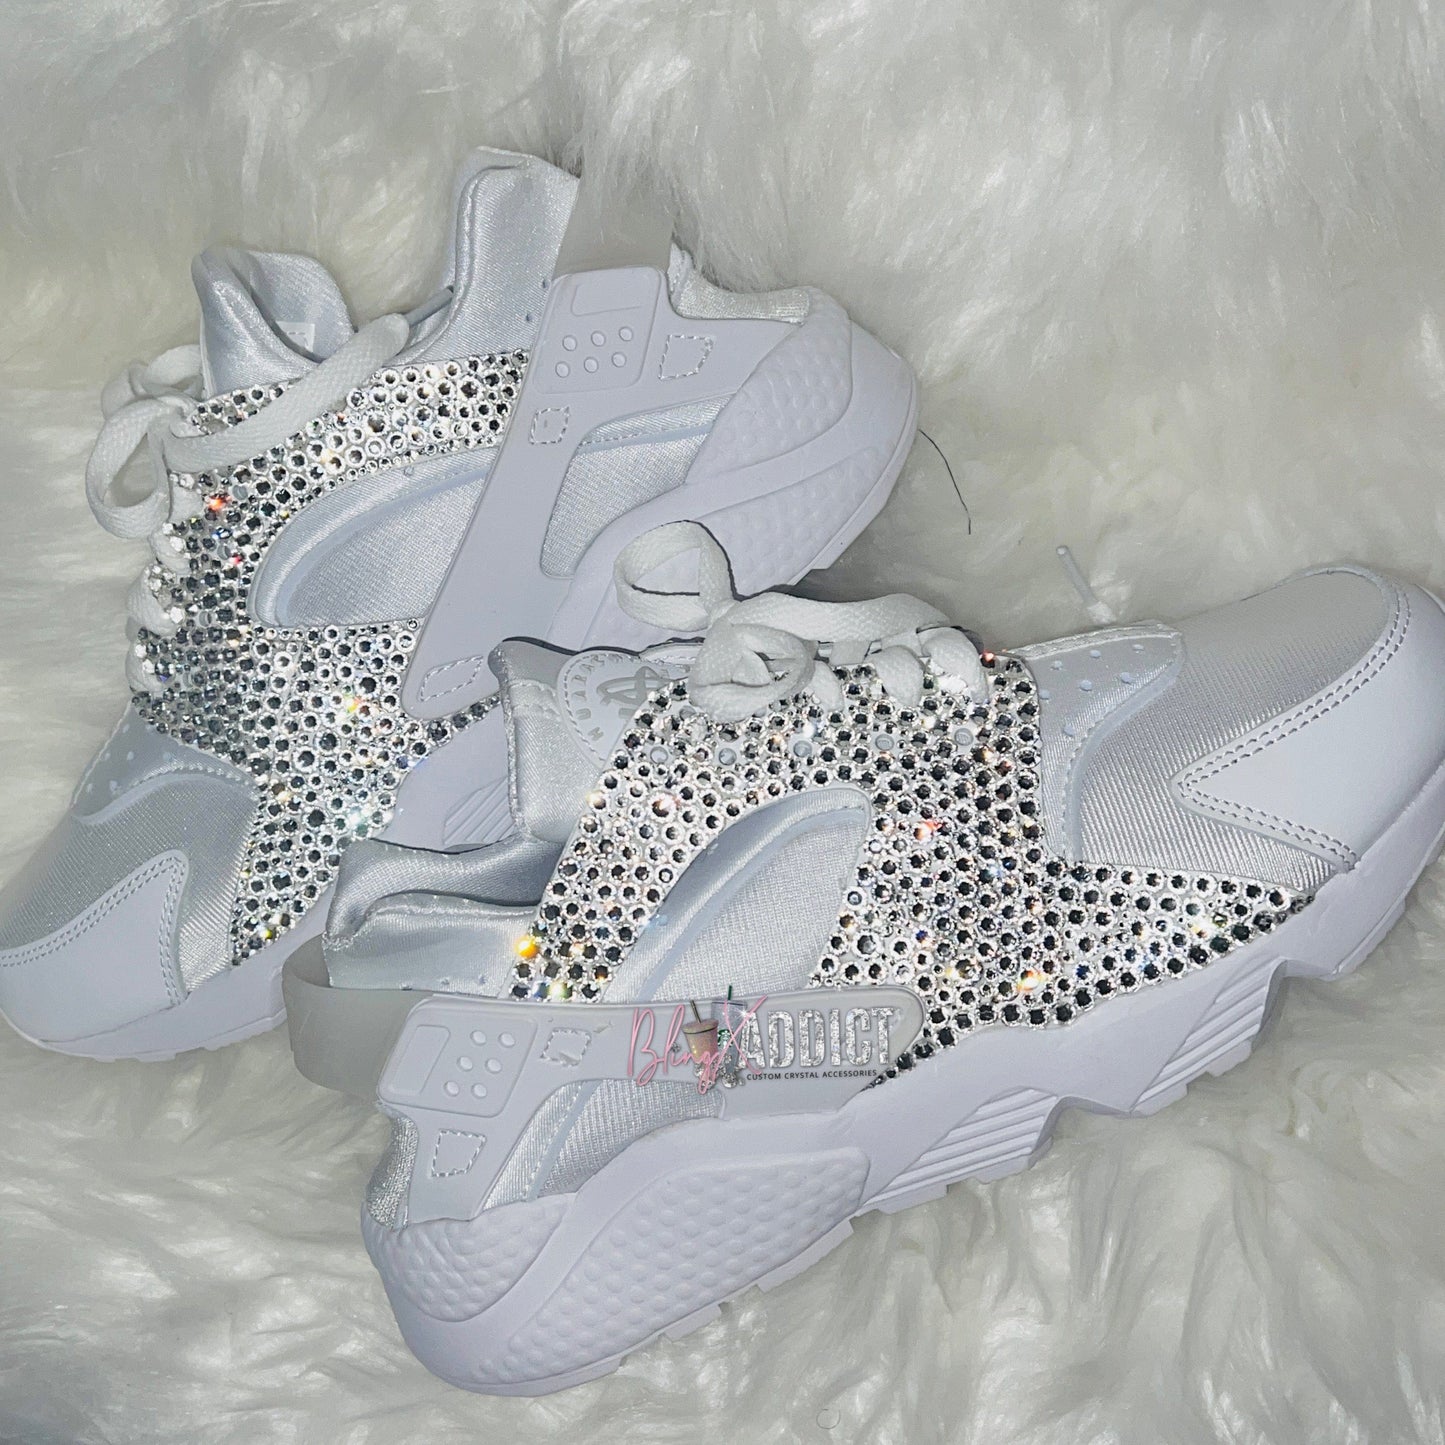 White Nike Huarache Swarovski Crystalized Sneakers 5 Crystal Clear Shoes by BlingxAddict | BlingxAddict